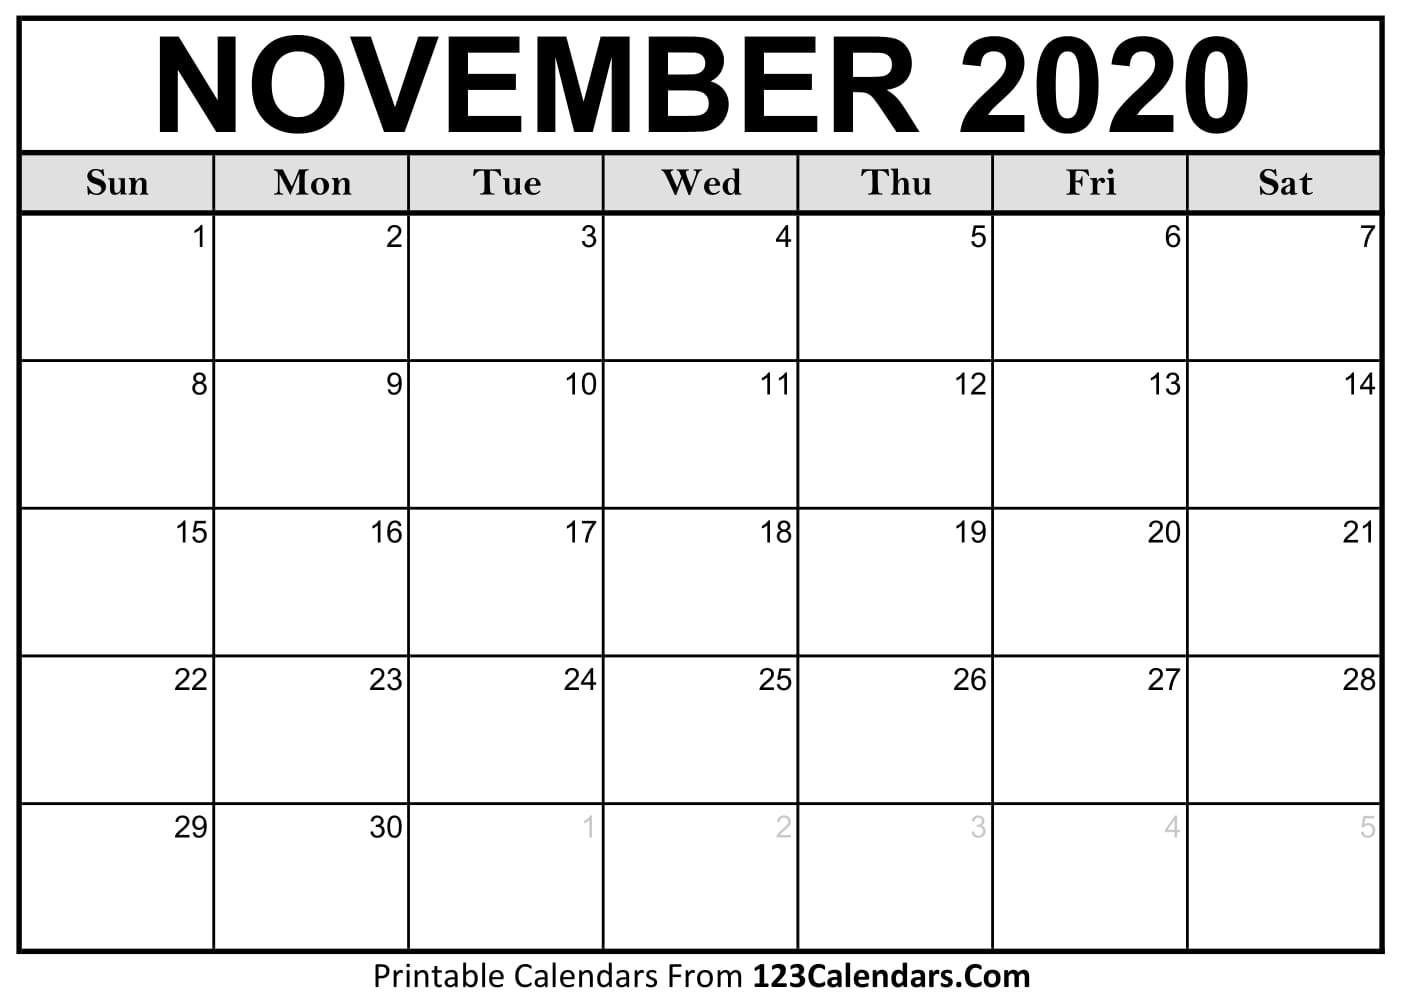 November 2020 Printable Calendar | 123Calendars Exceptional 2020 Calendar For November